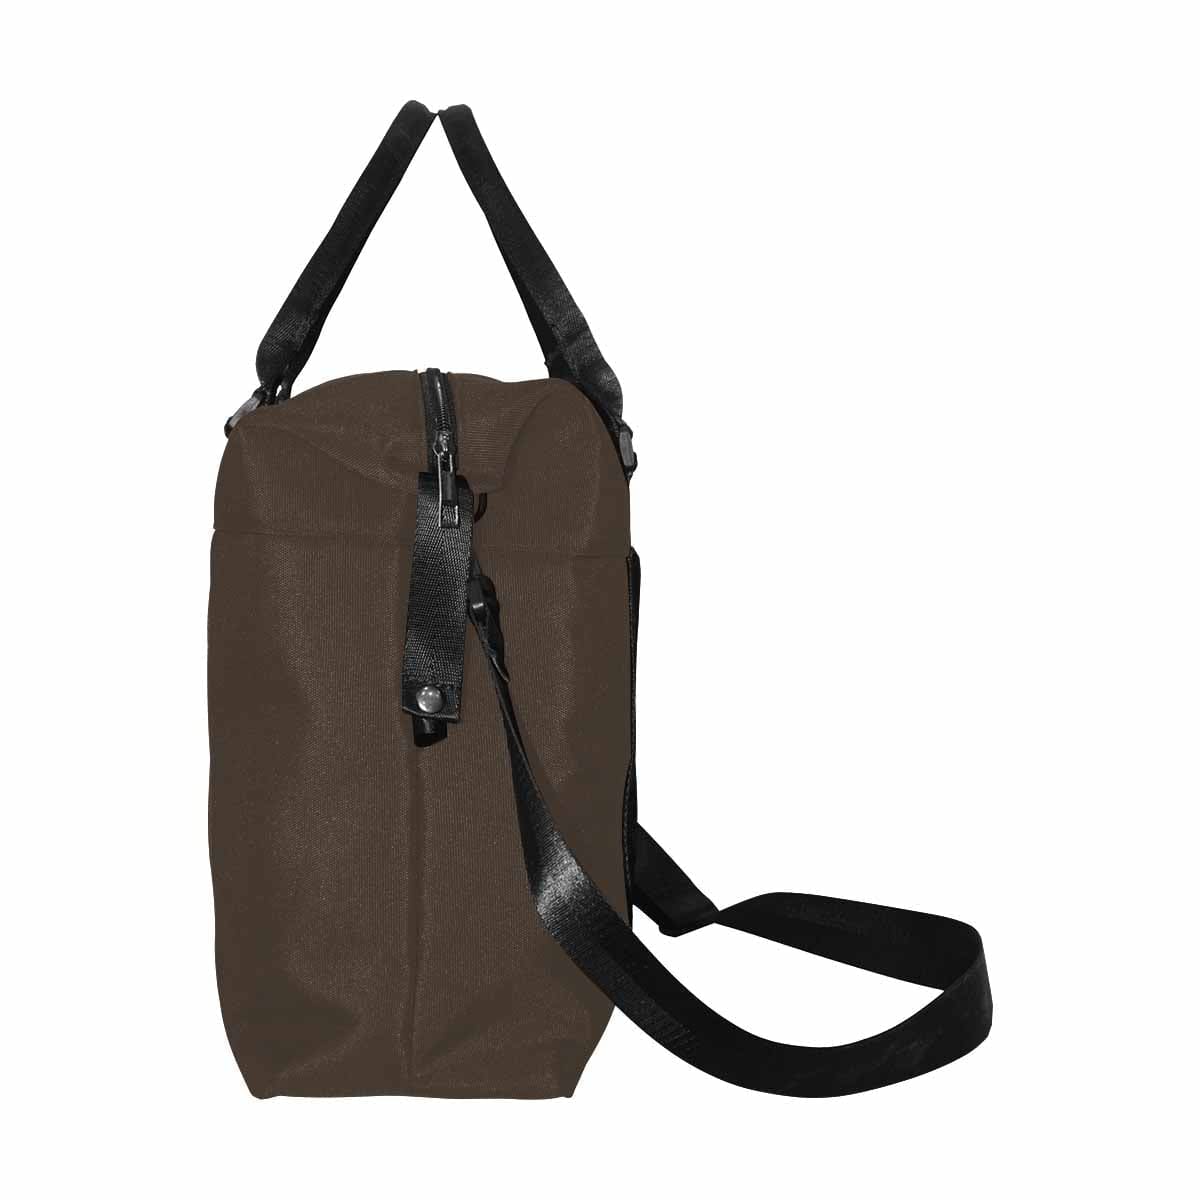 Dark Taupe Brown Duffel Bag Large Travel Carry On - Bags | Duffel Bags